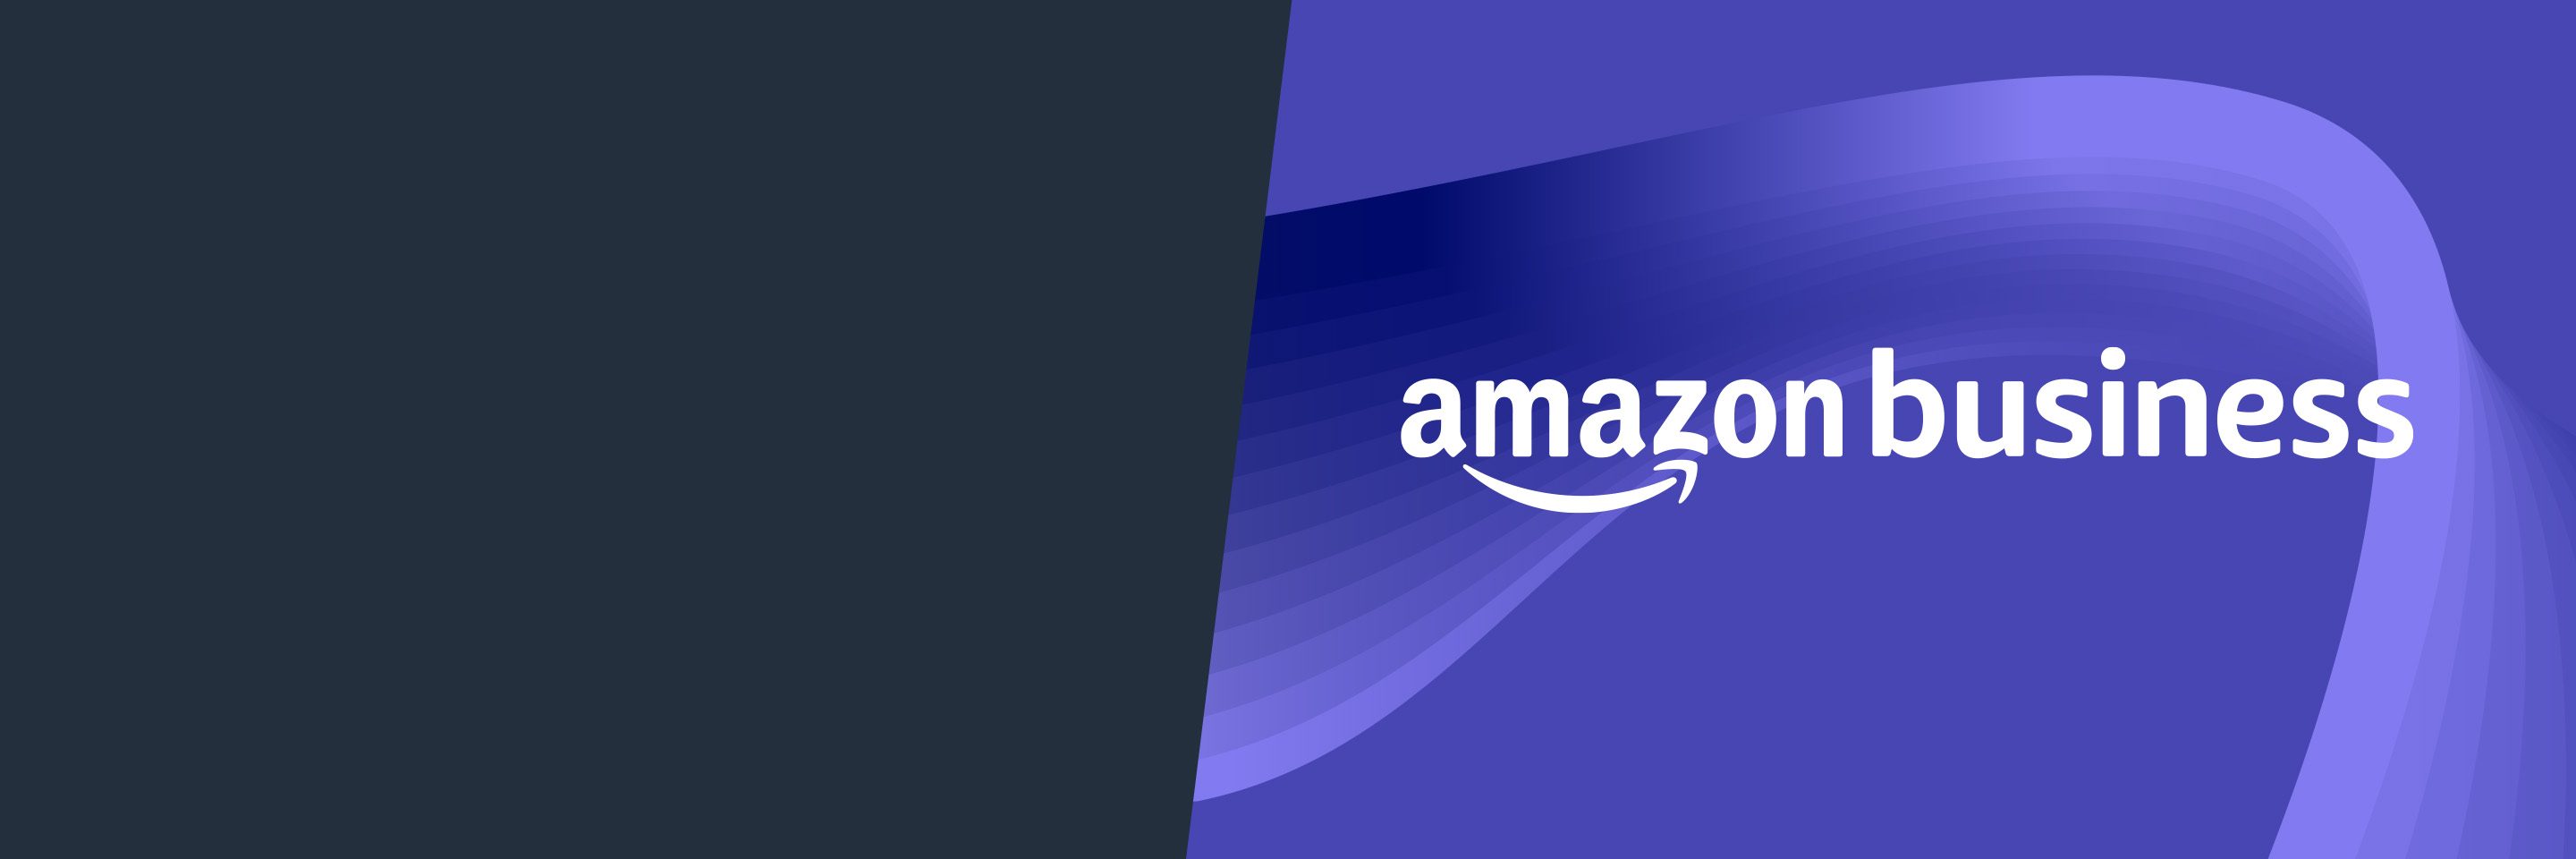 Amazon Business Blog